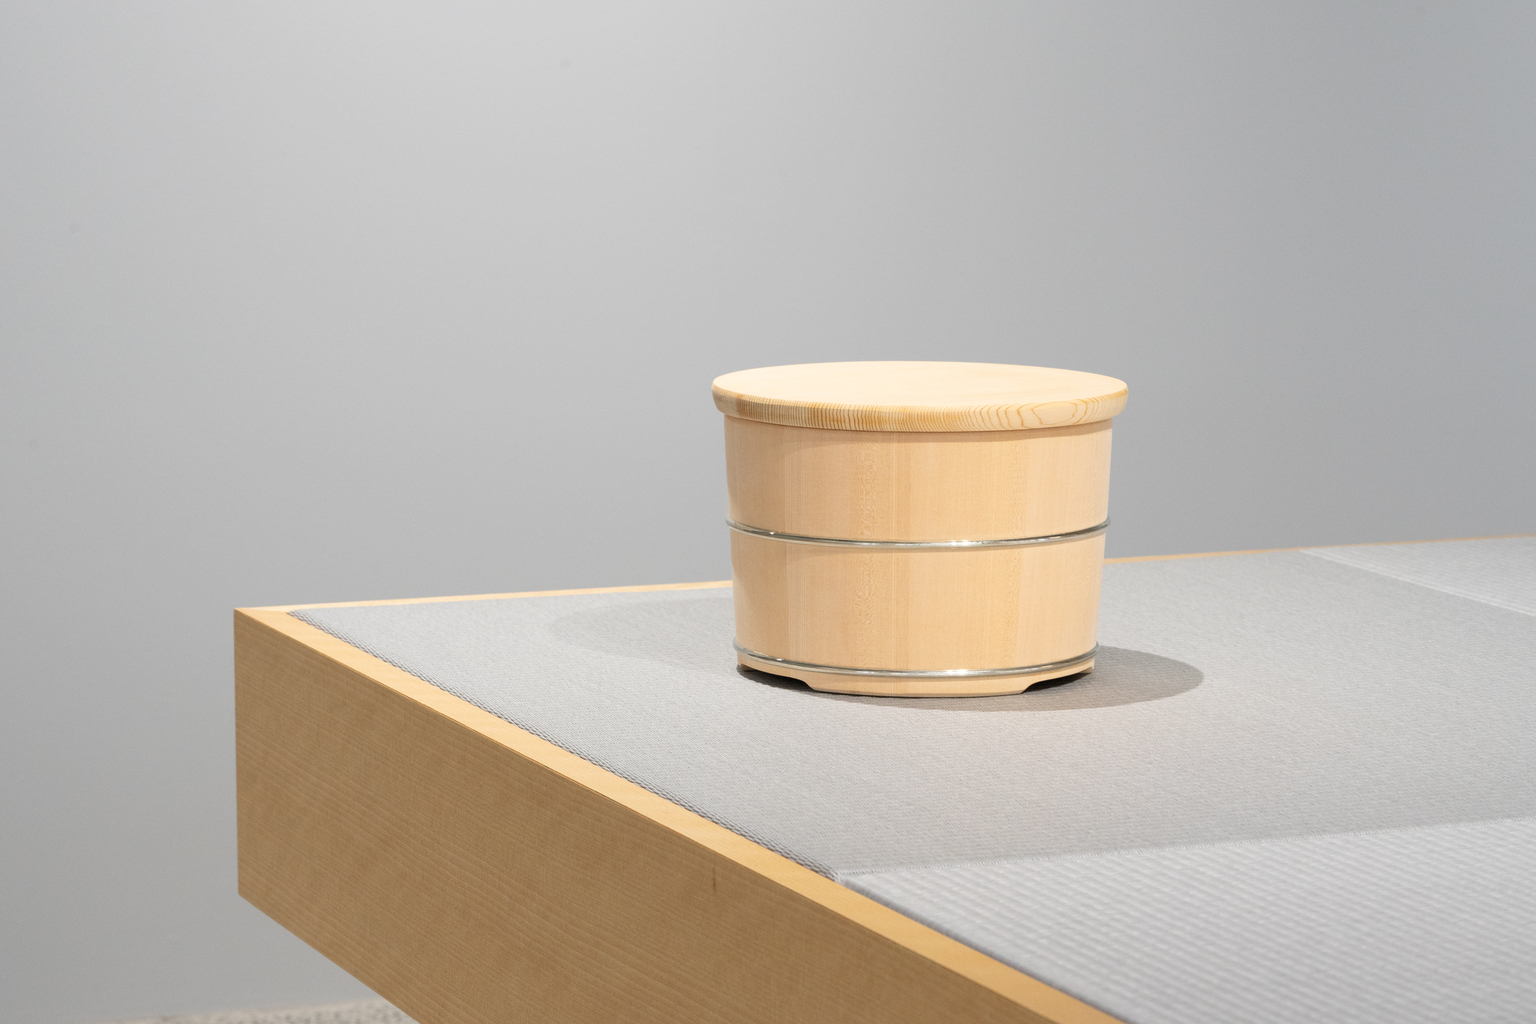 HULS GALLERY TOKYO Edo yui-oke wooden tub “Okeei” Eifu Kawamata Exhibition “Joining Plain Wood”